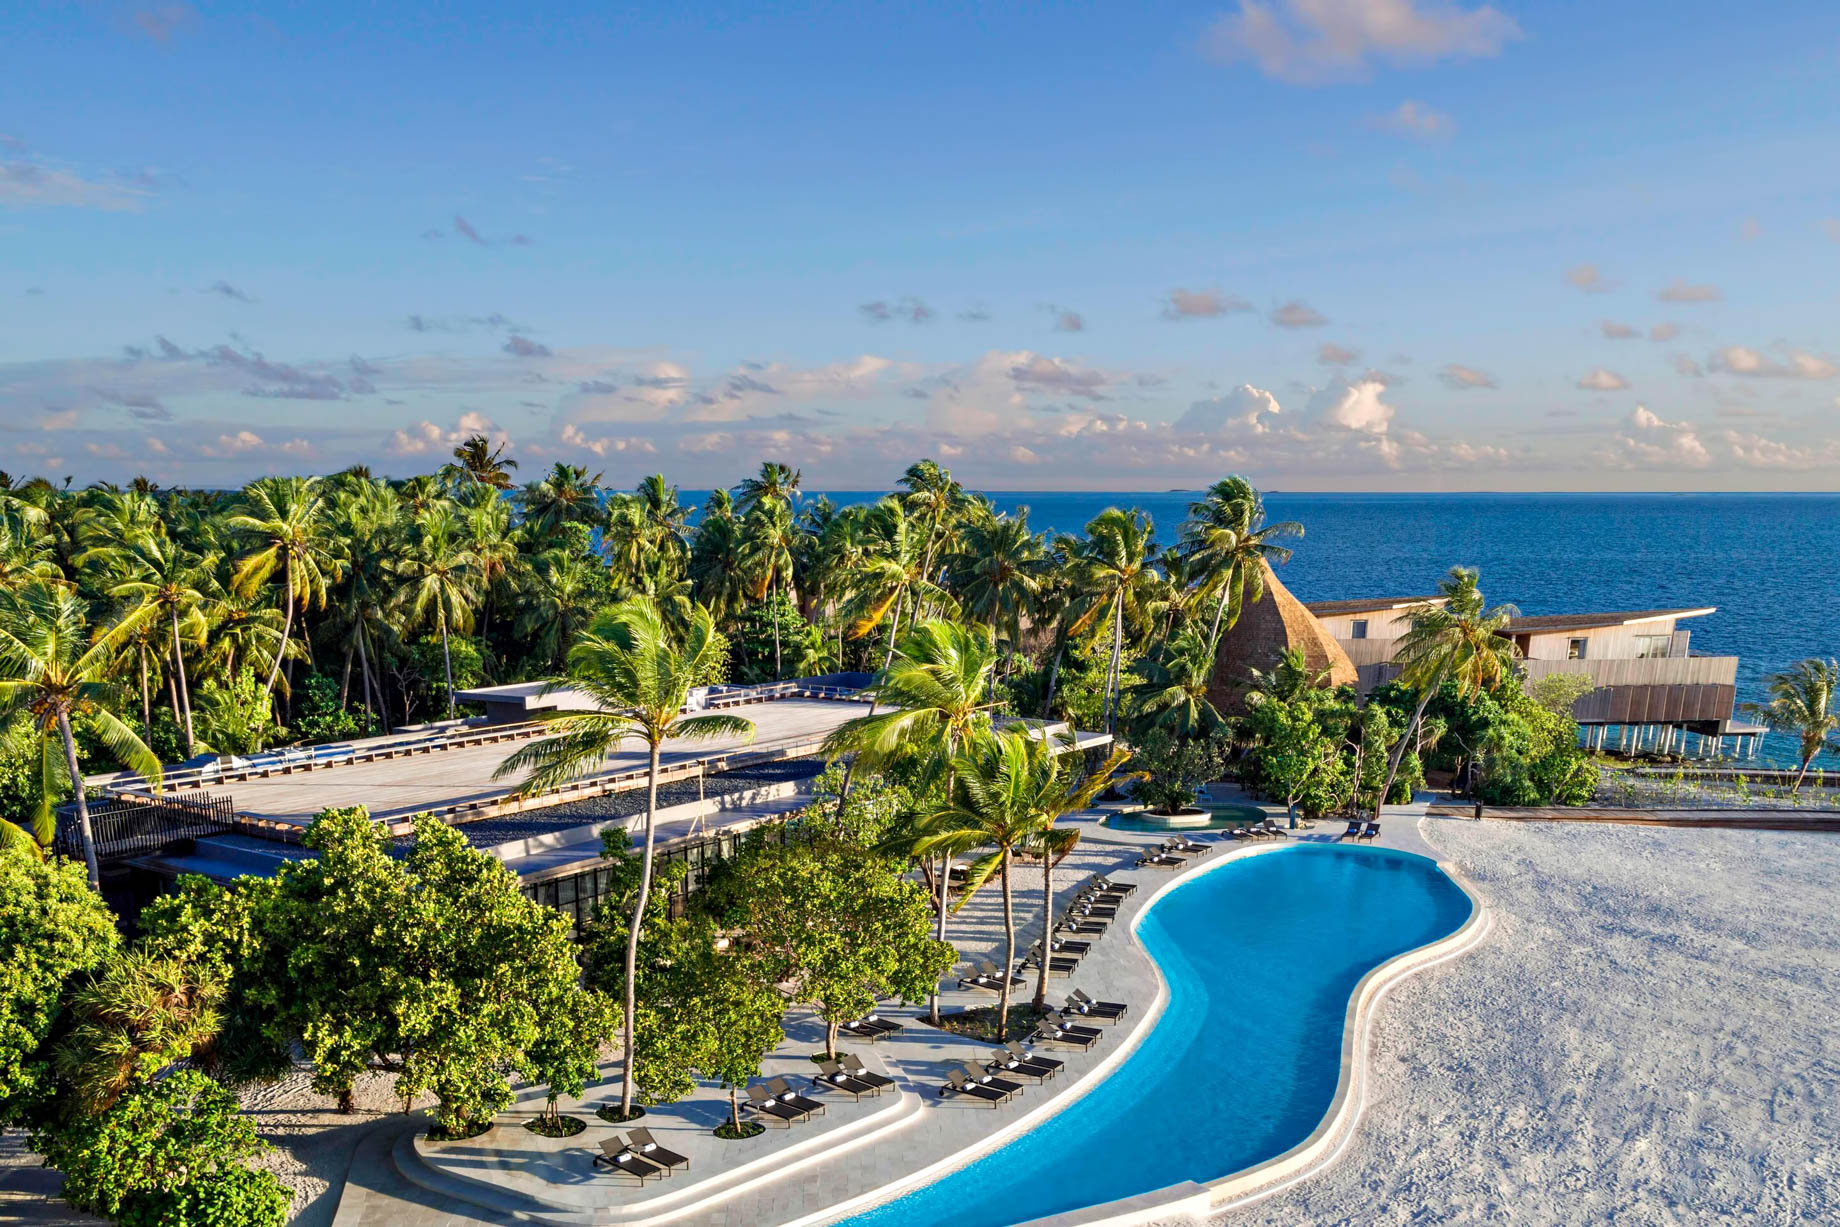 The St. Regis Maldives Vommuli Resort - Dhaalu Atoll, Maldives - Infinity Pool